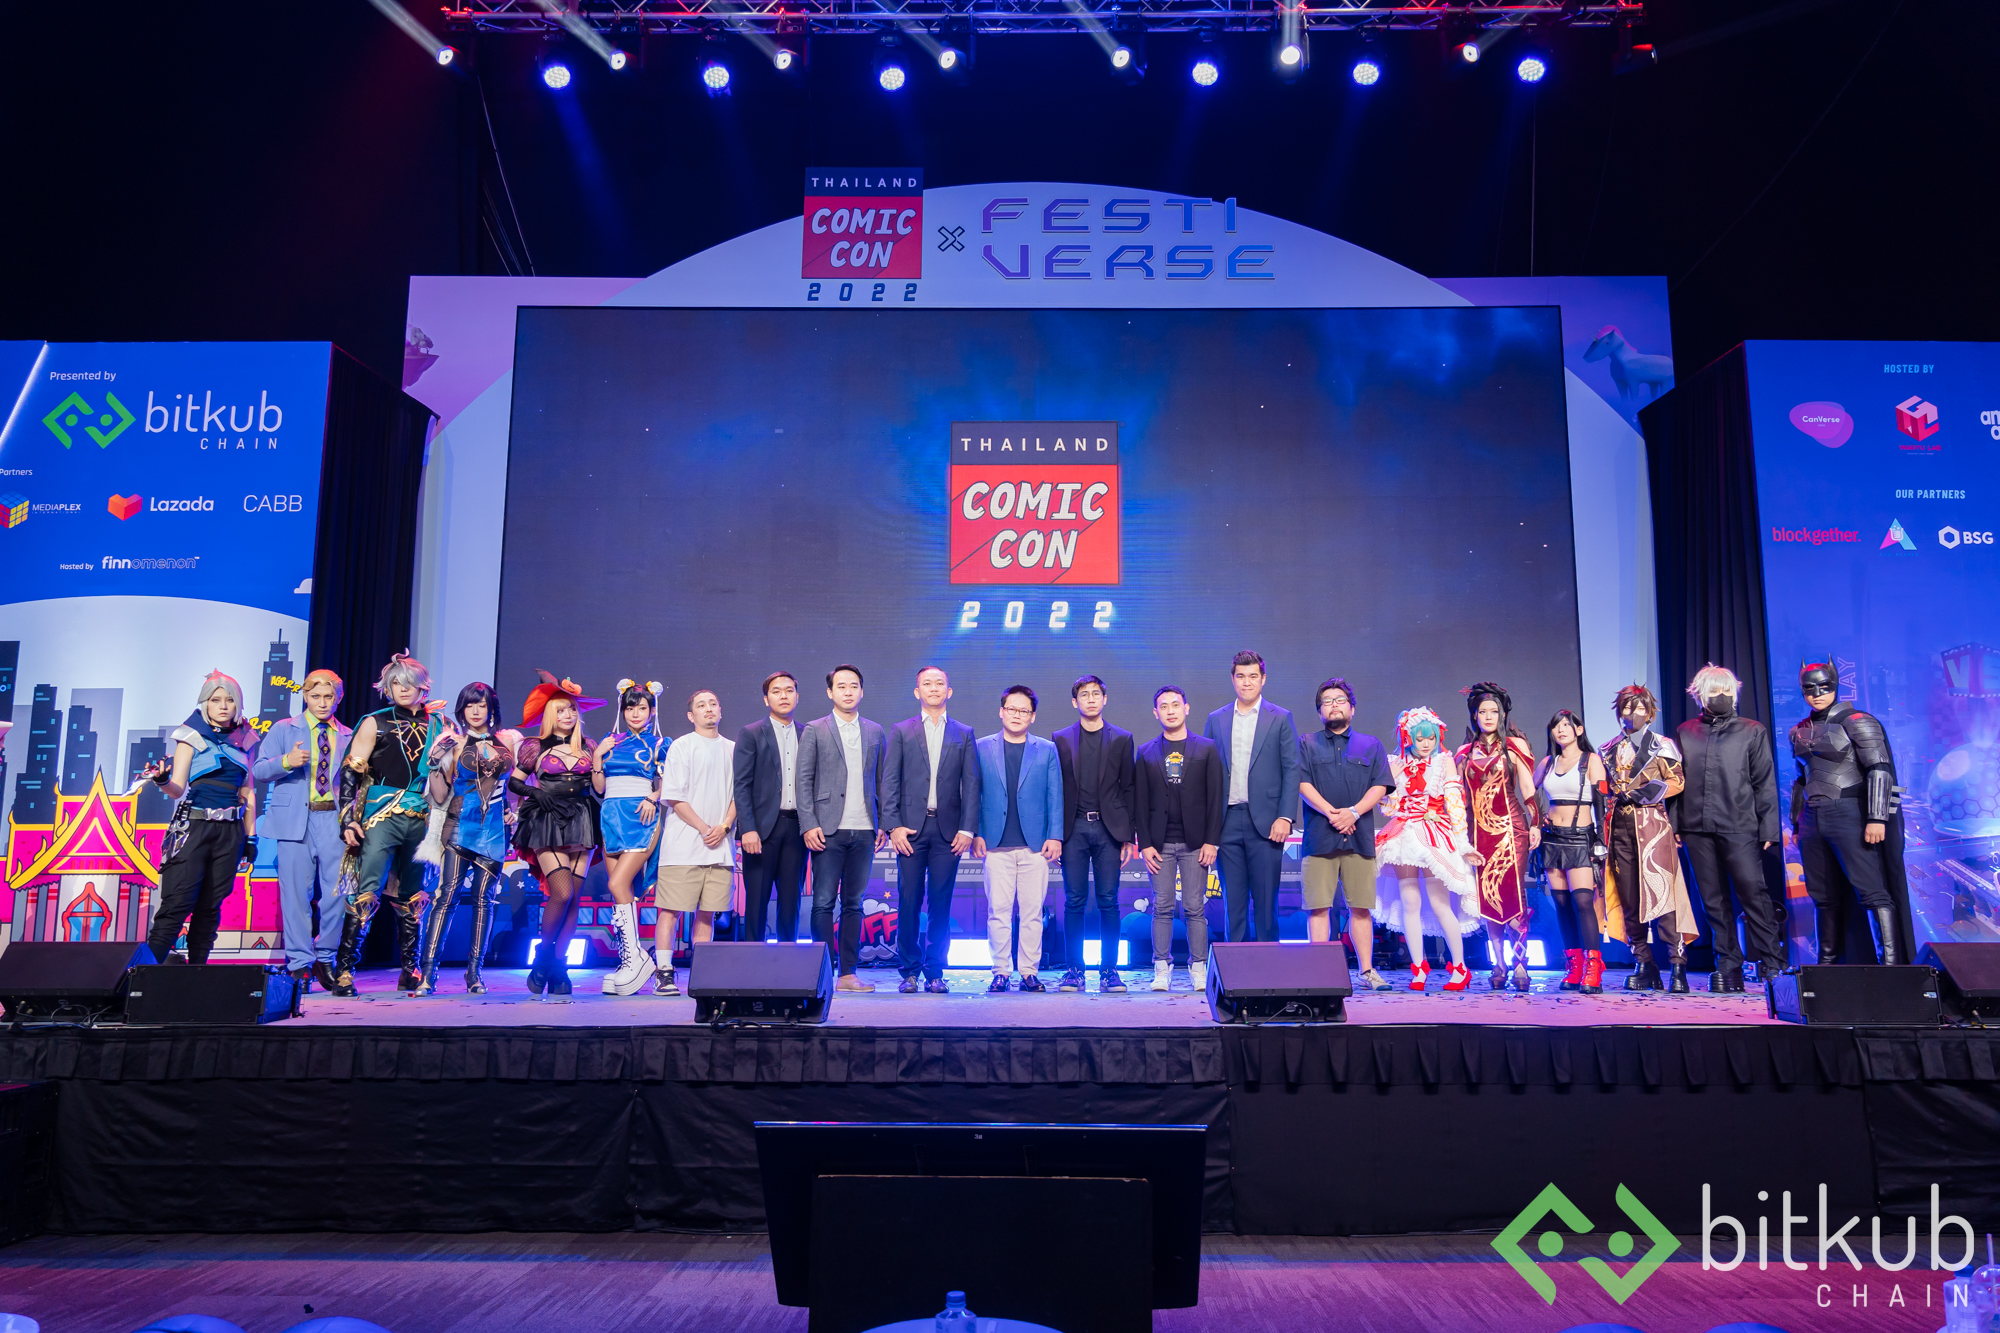 Bitkub Chain ร่วมสร้างปรากฏการณ์ Pop Culture ผสาน Web3 ยิ่งใหญ่ที่สุดแห่งปี Thailand Comic Con X Festiverse 2022 Presented by Bitkub Chain